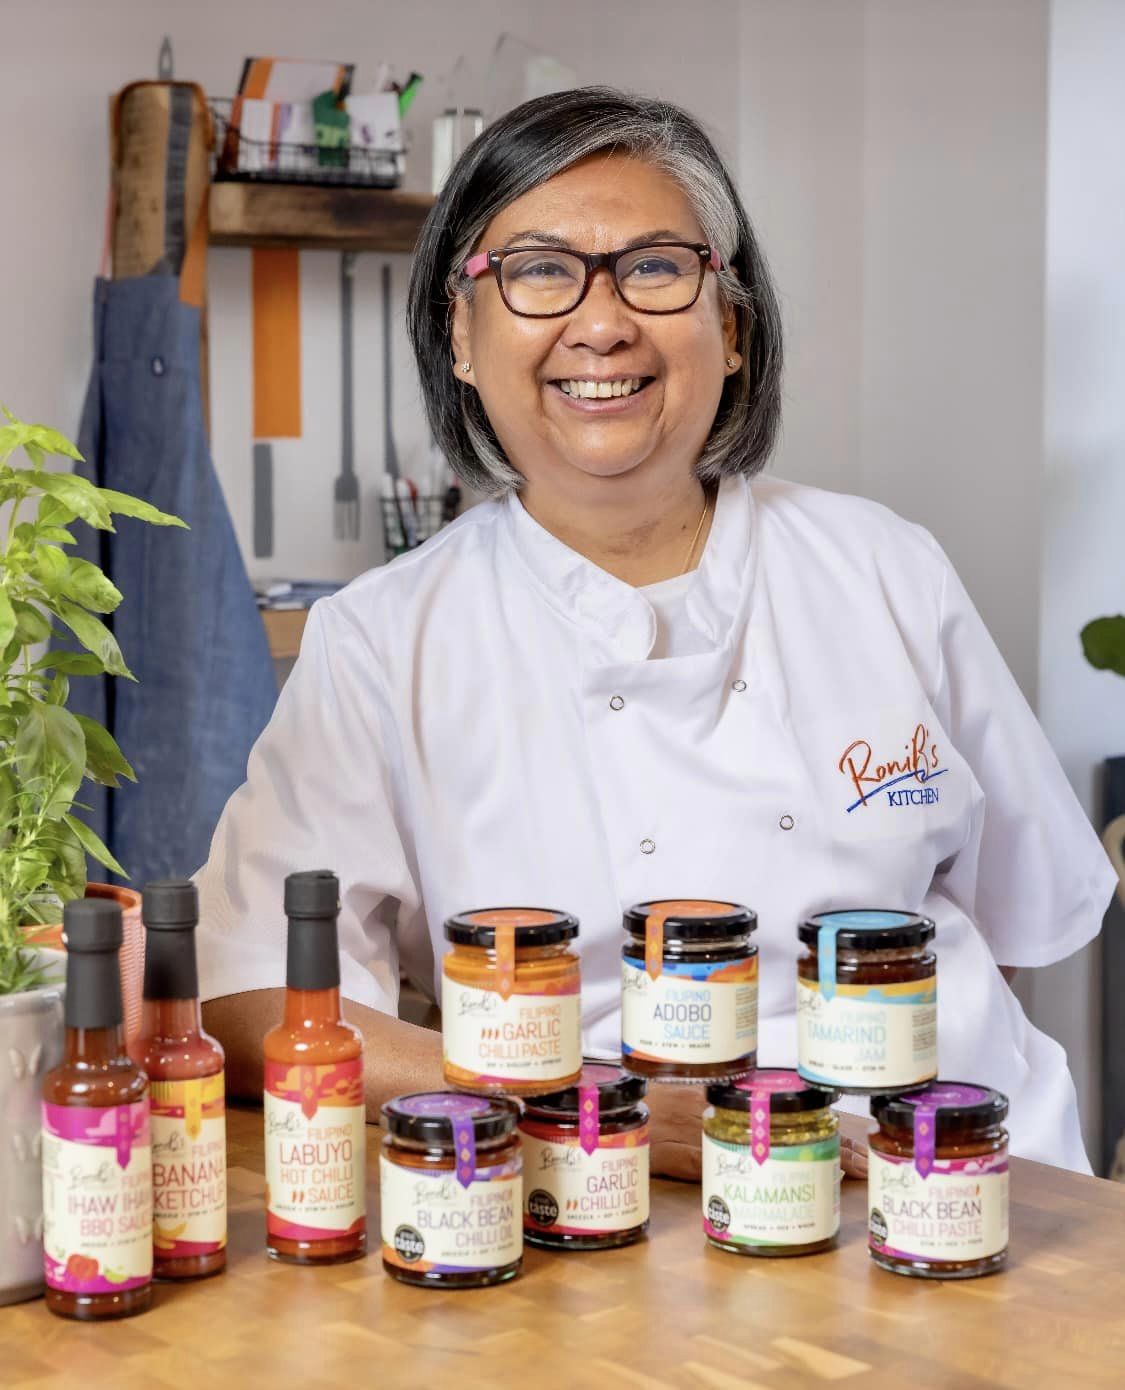 RoniB’s Kitchen’s Award-winning Filipino products stocked in Selfridges, London